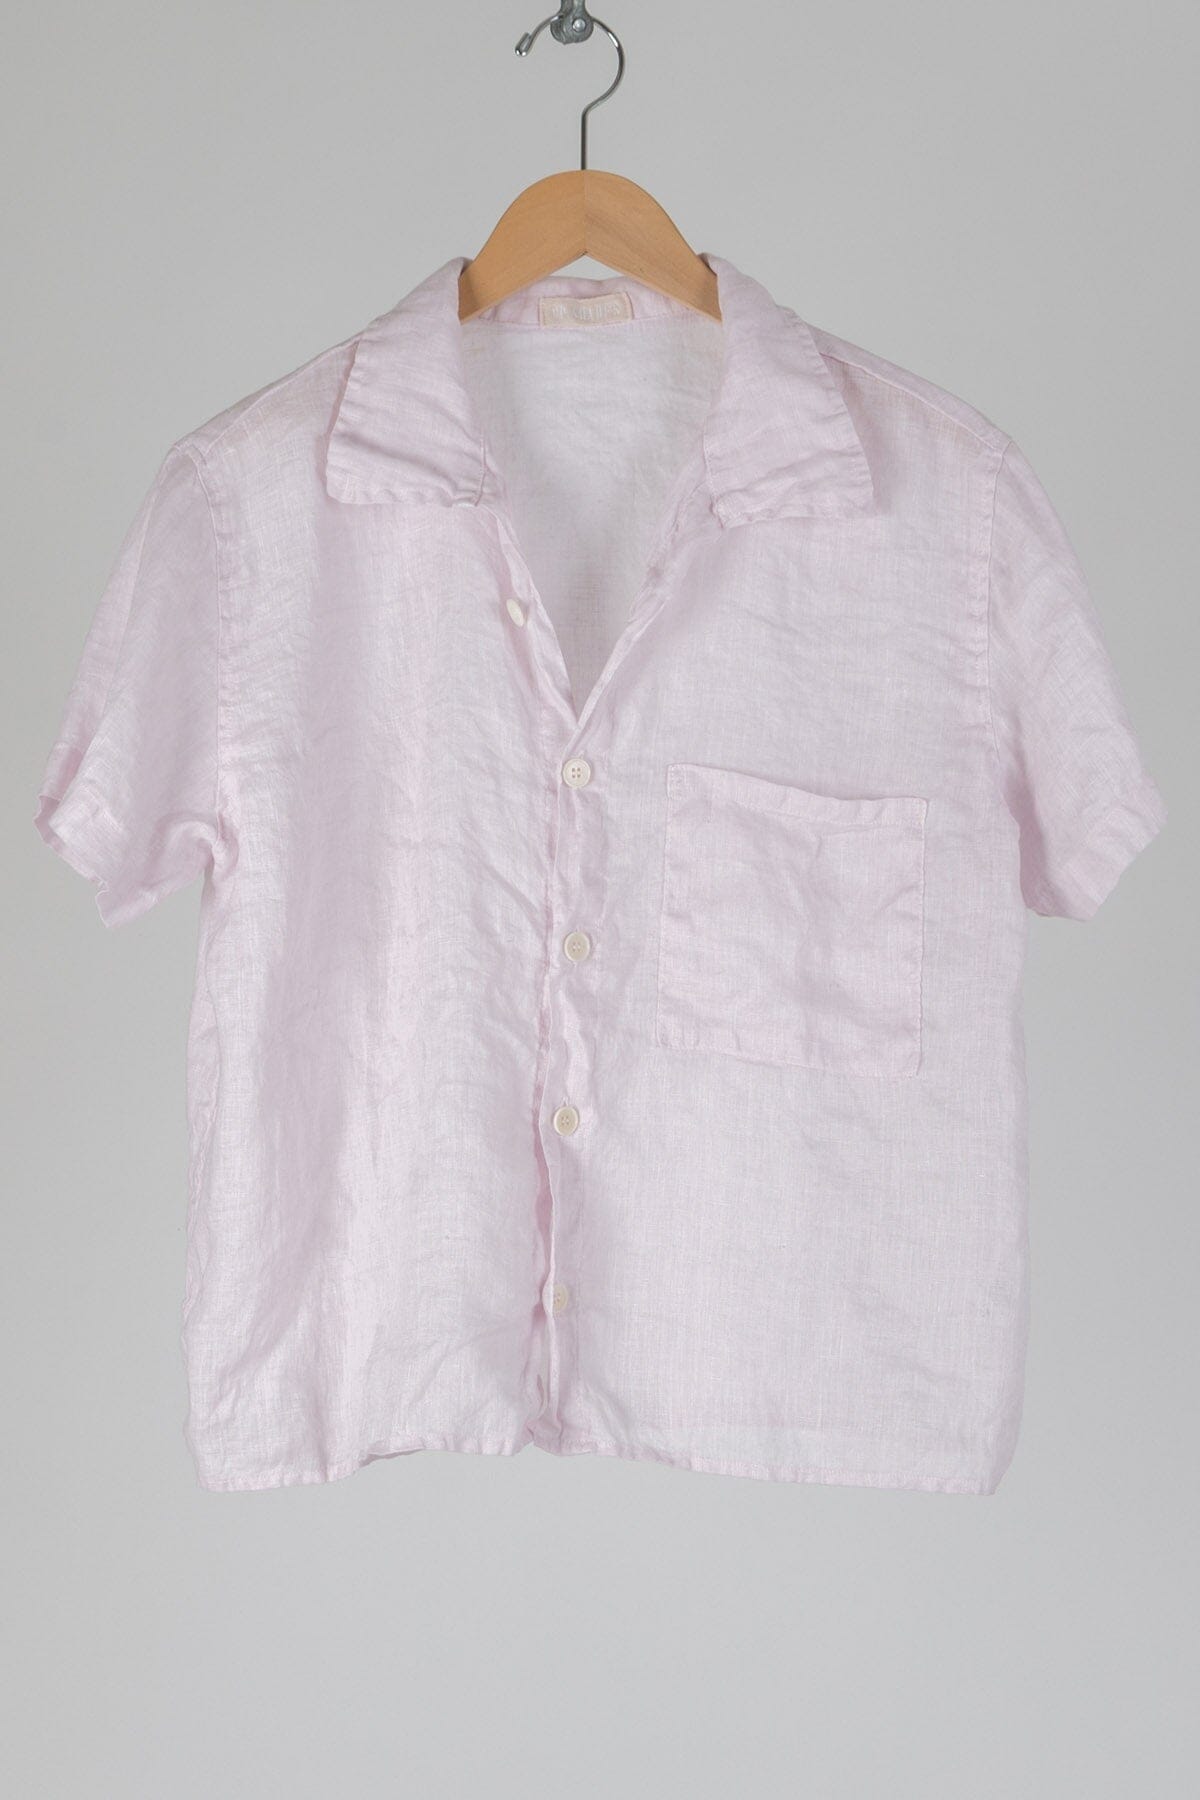 Nic - Linen S10 - Linen Shirt/Top/Tunic CP Shades lavender